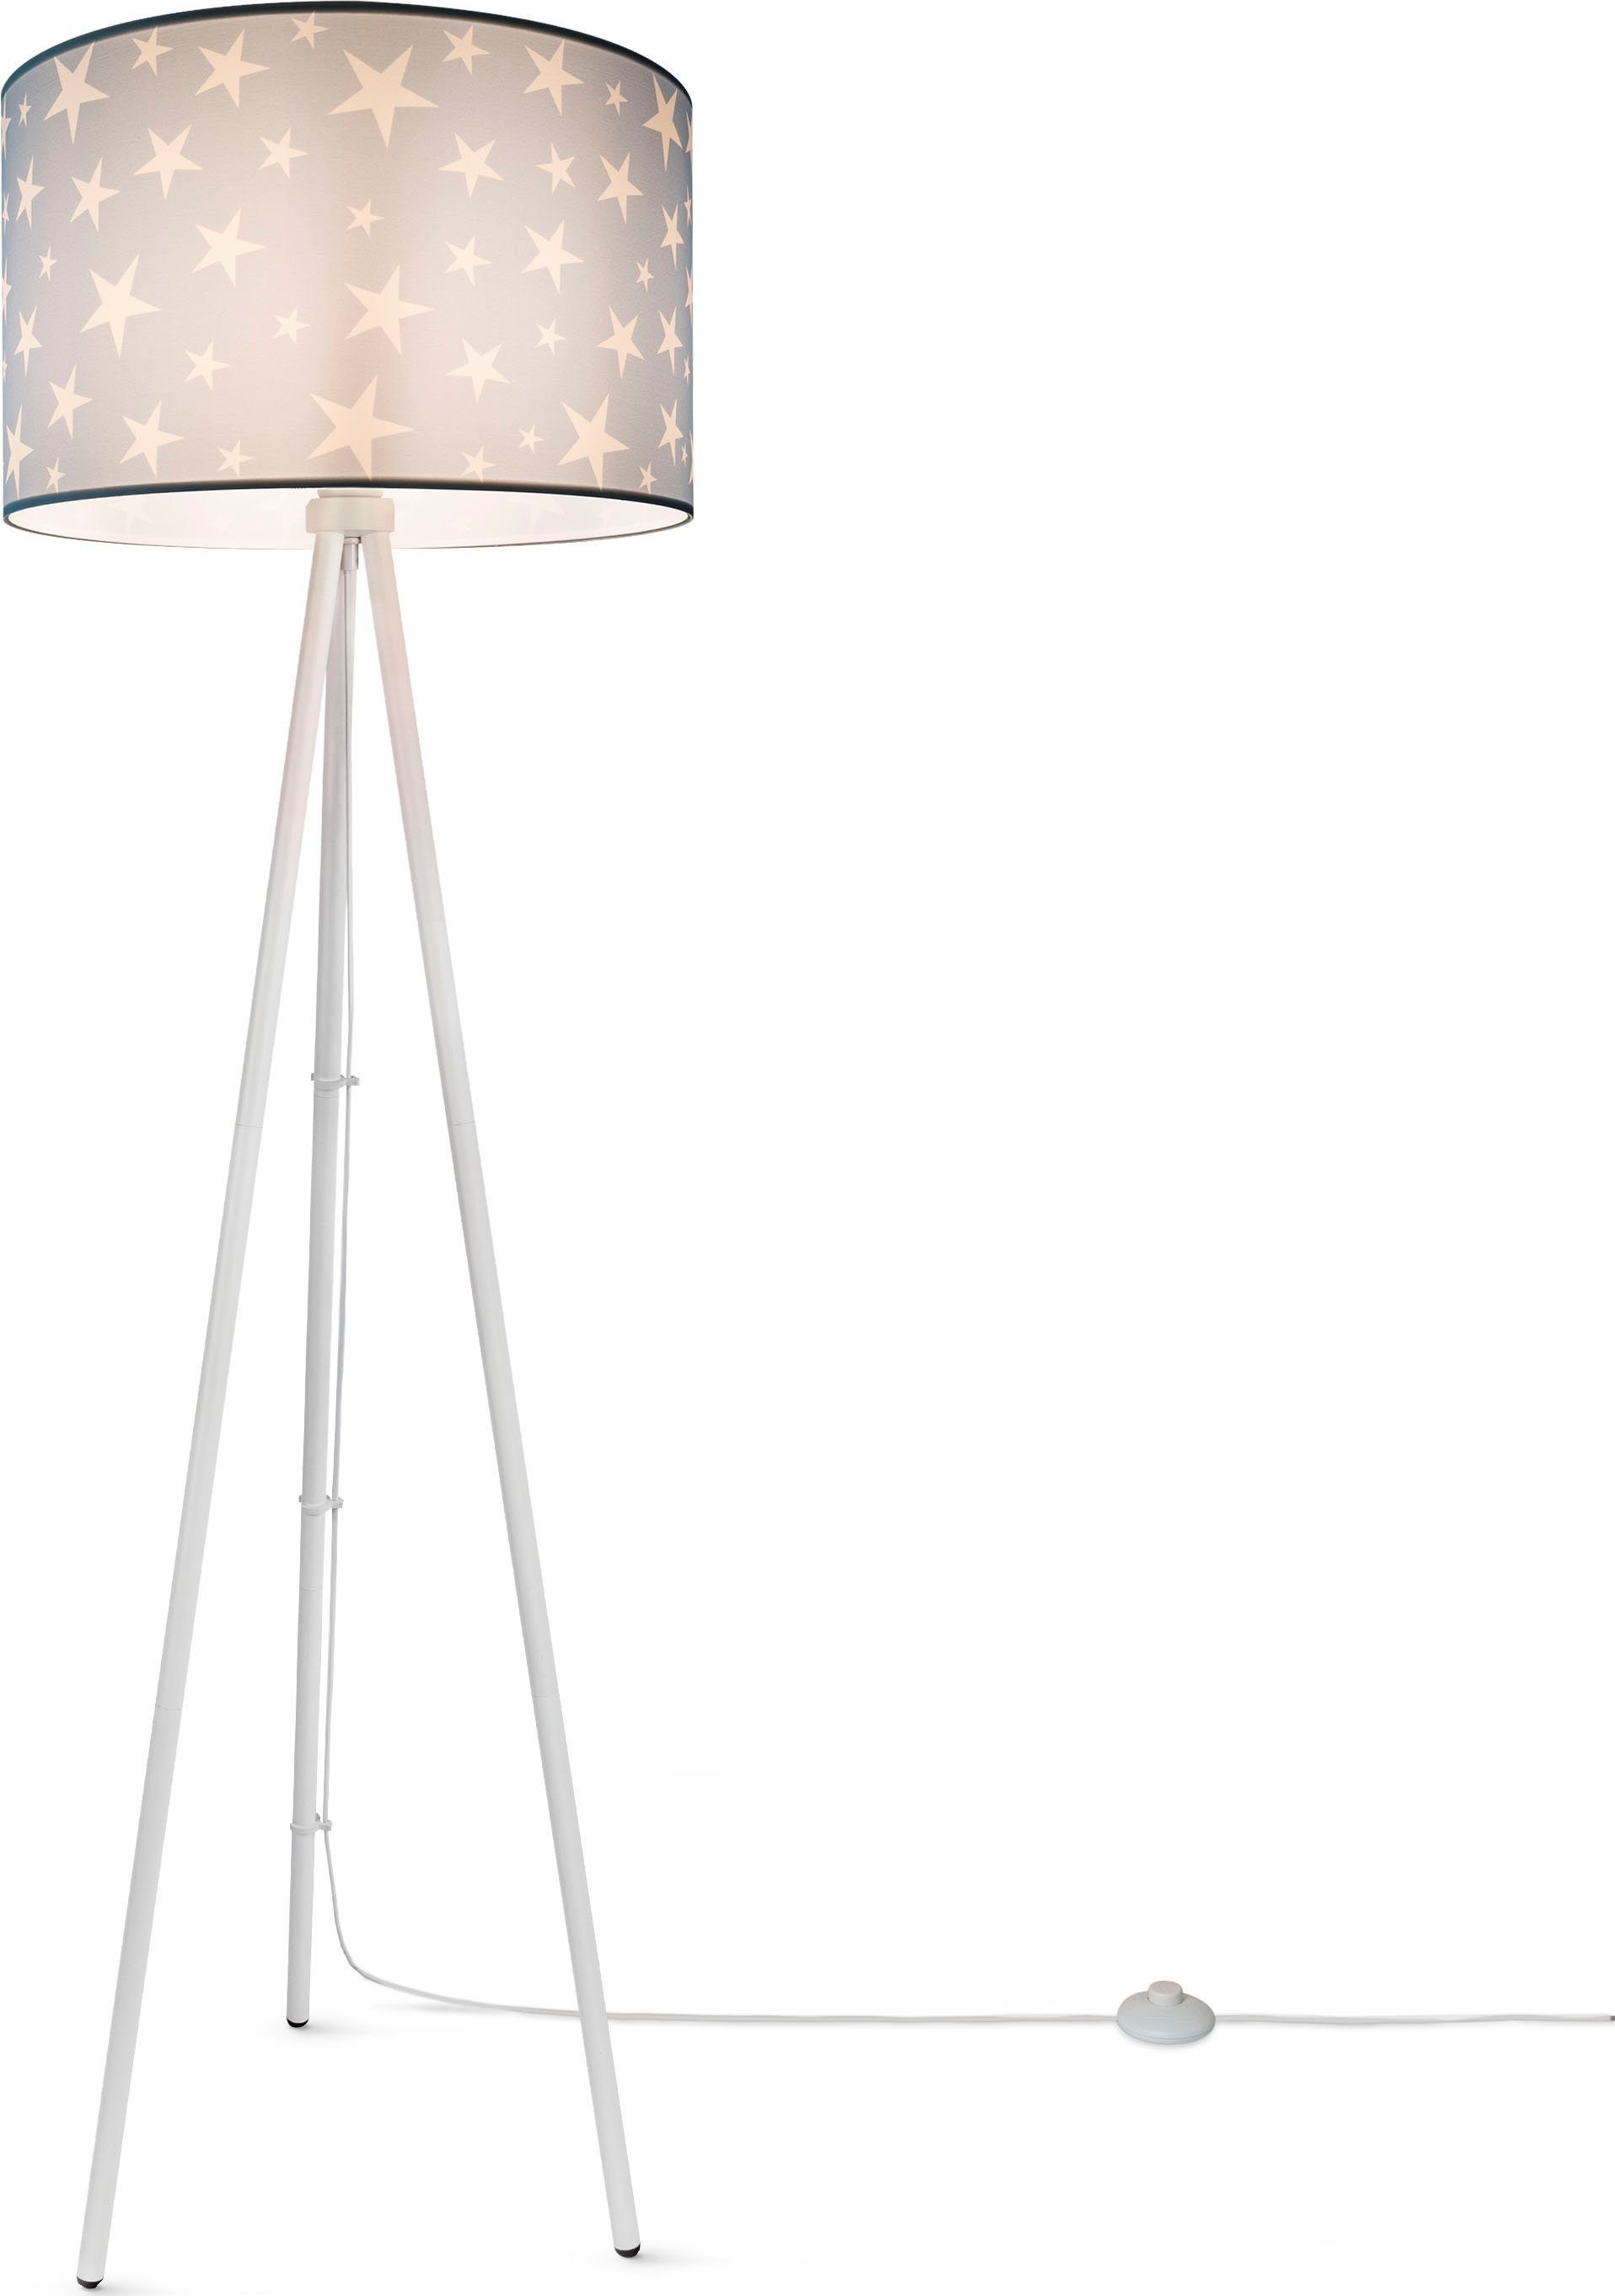 E27 Stehlampe Leuchtmittel, Deko Capri, ohne Paco Home LED Kinderzimmer, Sternen-Motiv, Trina Stehleuchte Kinderlampe